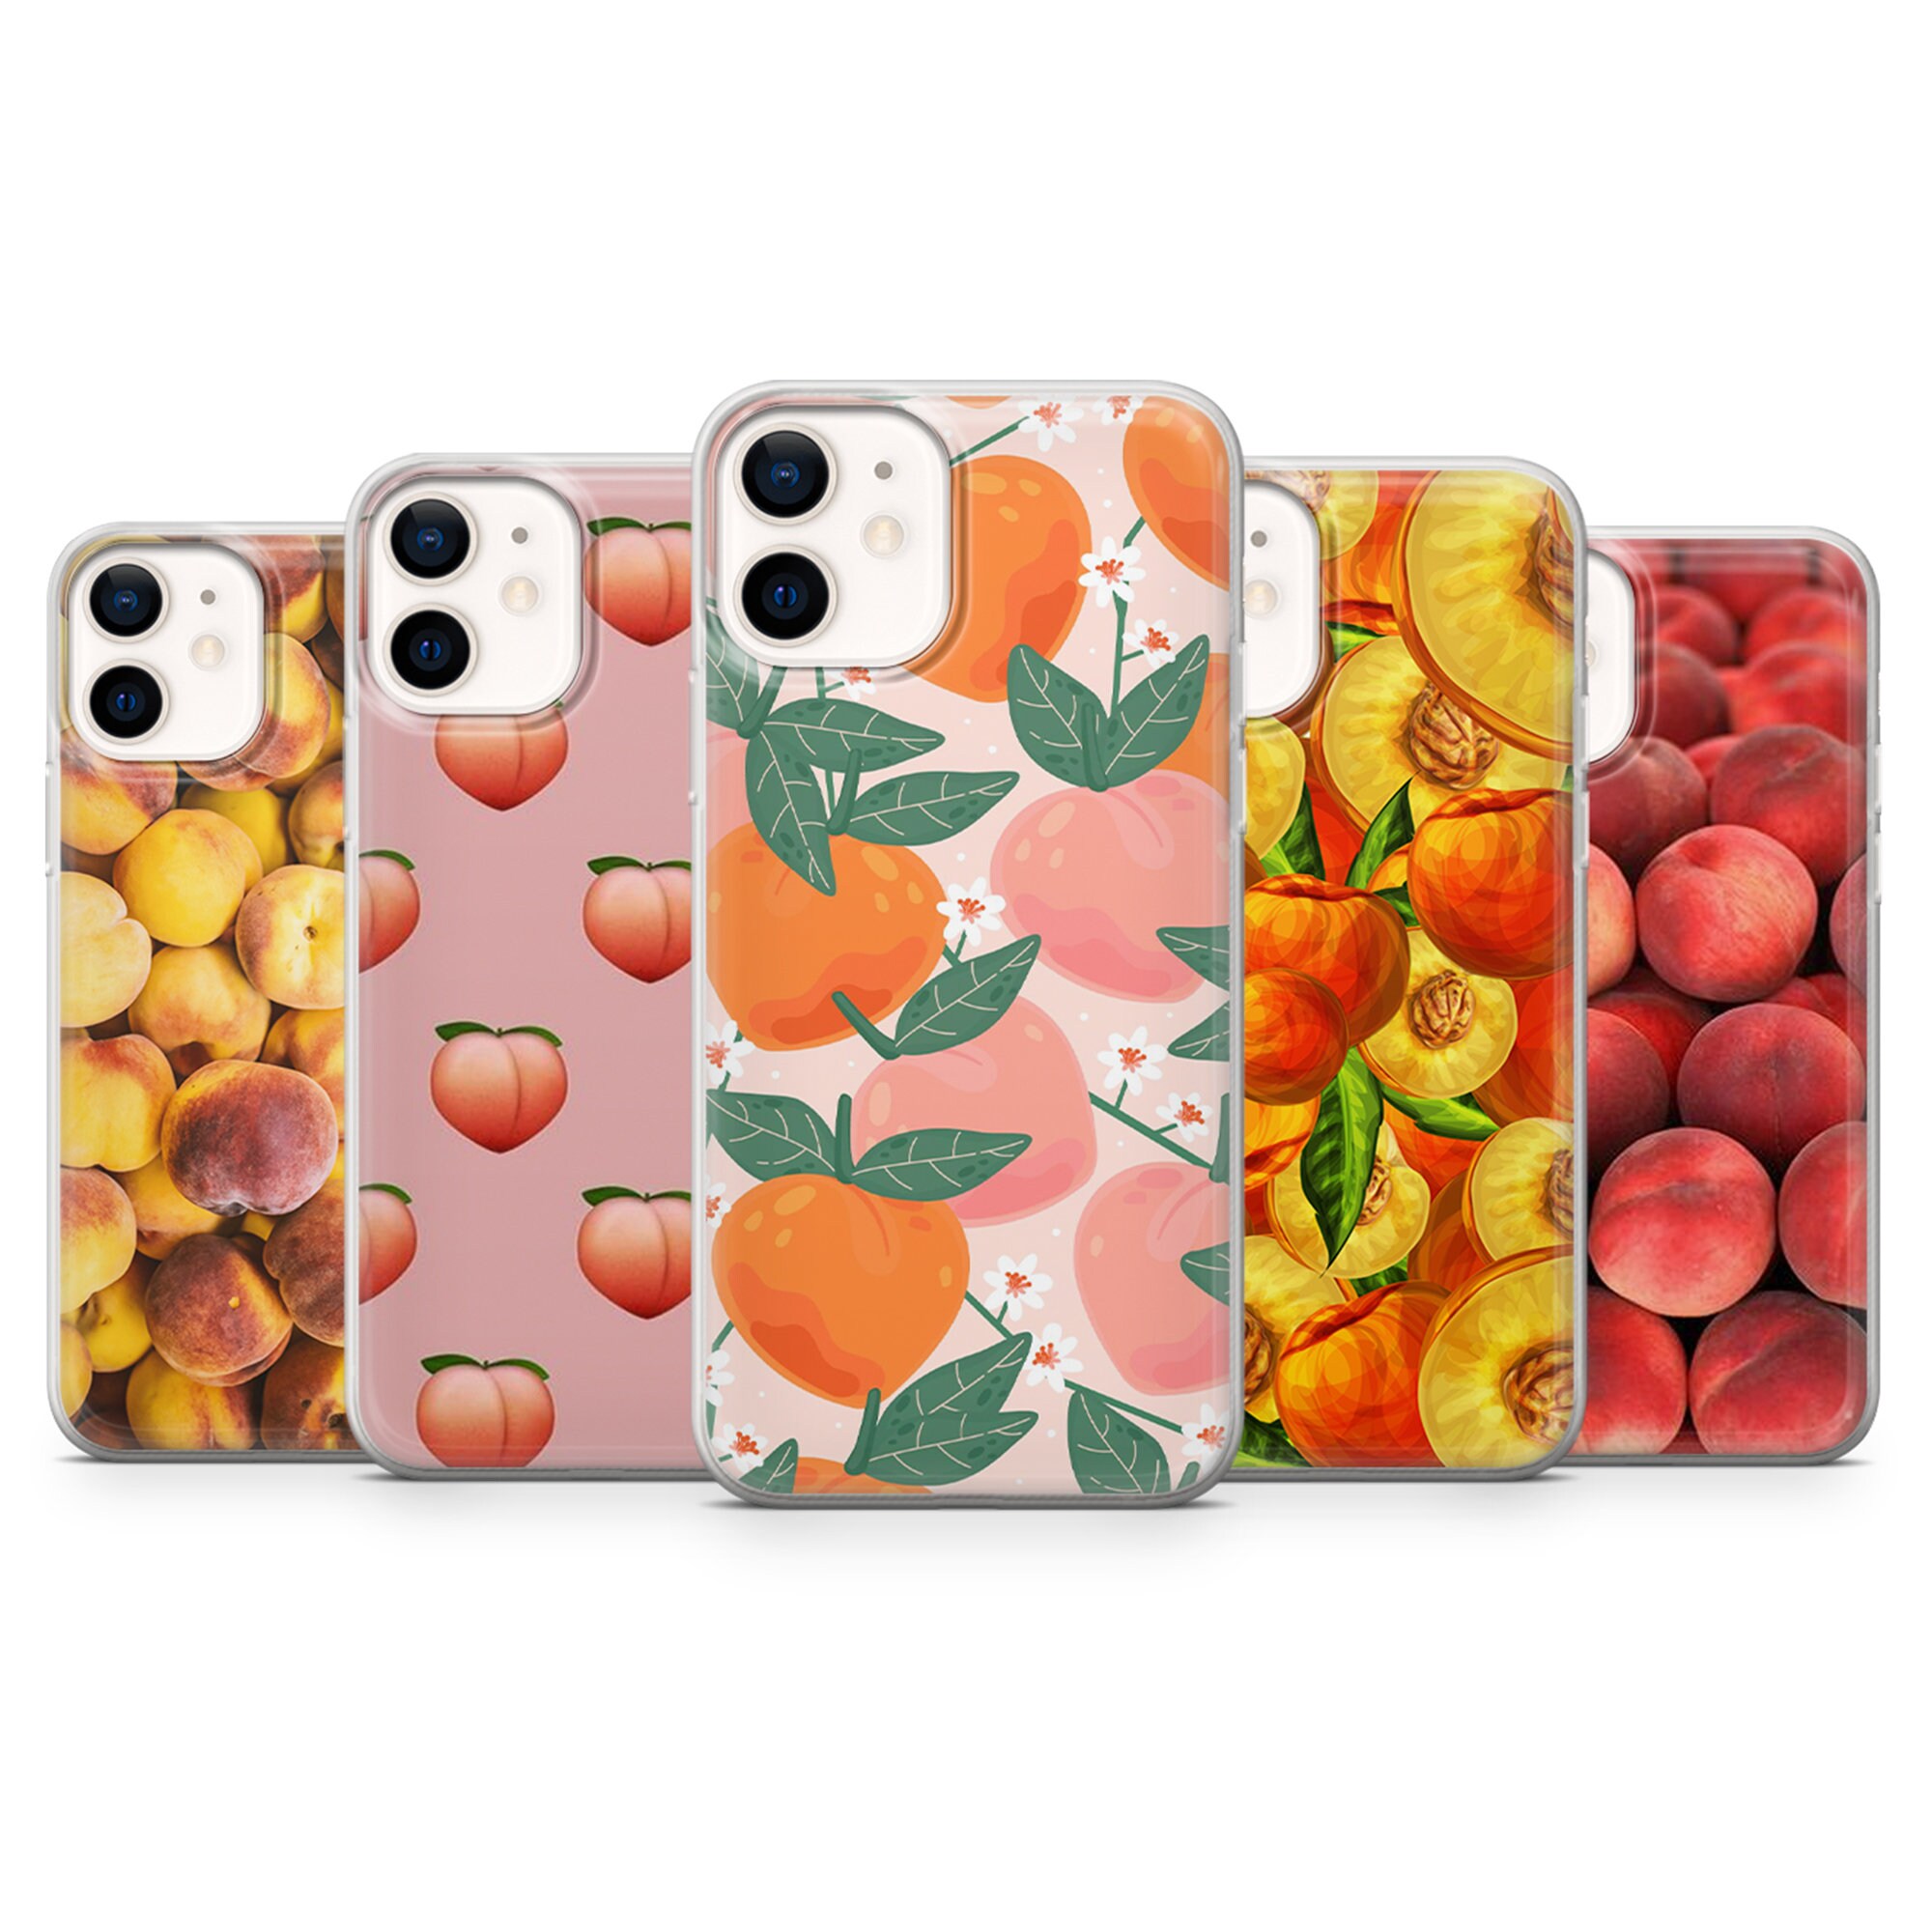 Peaches Fruits Phone Case for Google Pixel 3 3A XL 2 XL Case Cover Unique Custom Peach Summer Phone Cover A515 